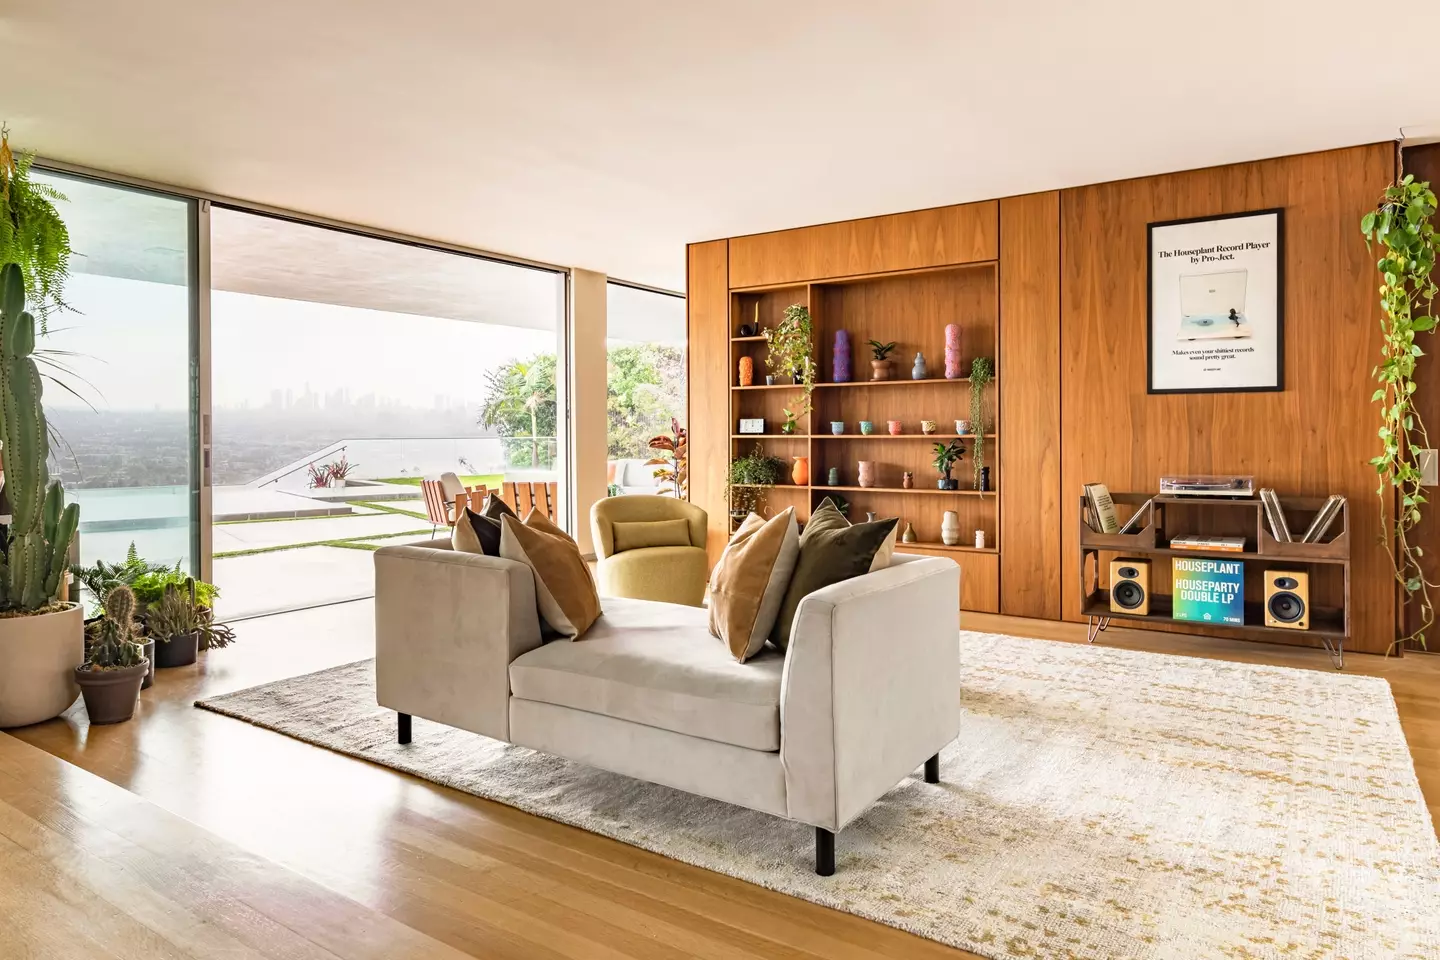 Airbnb have described Rogen's LA home as 'mid-century modern'